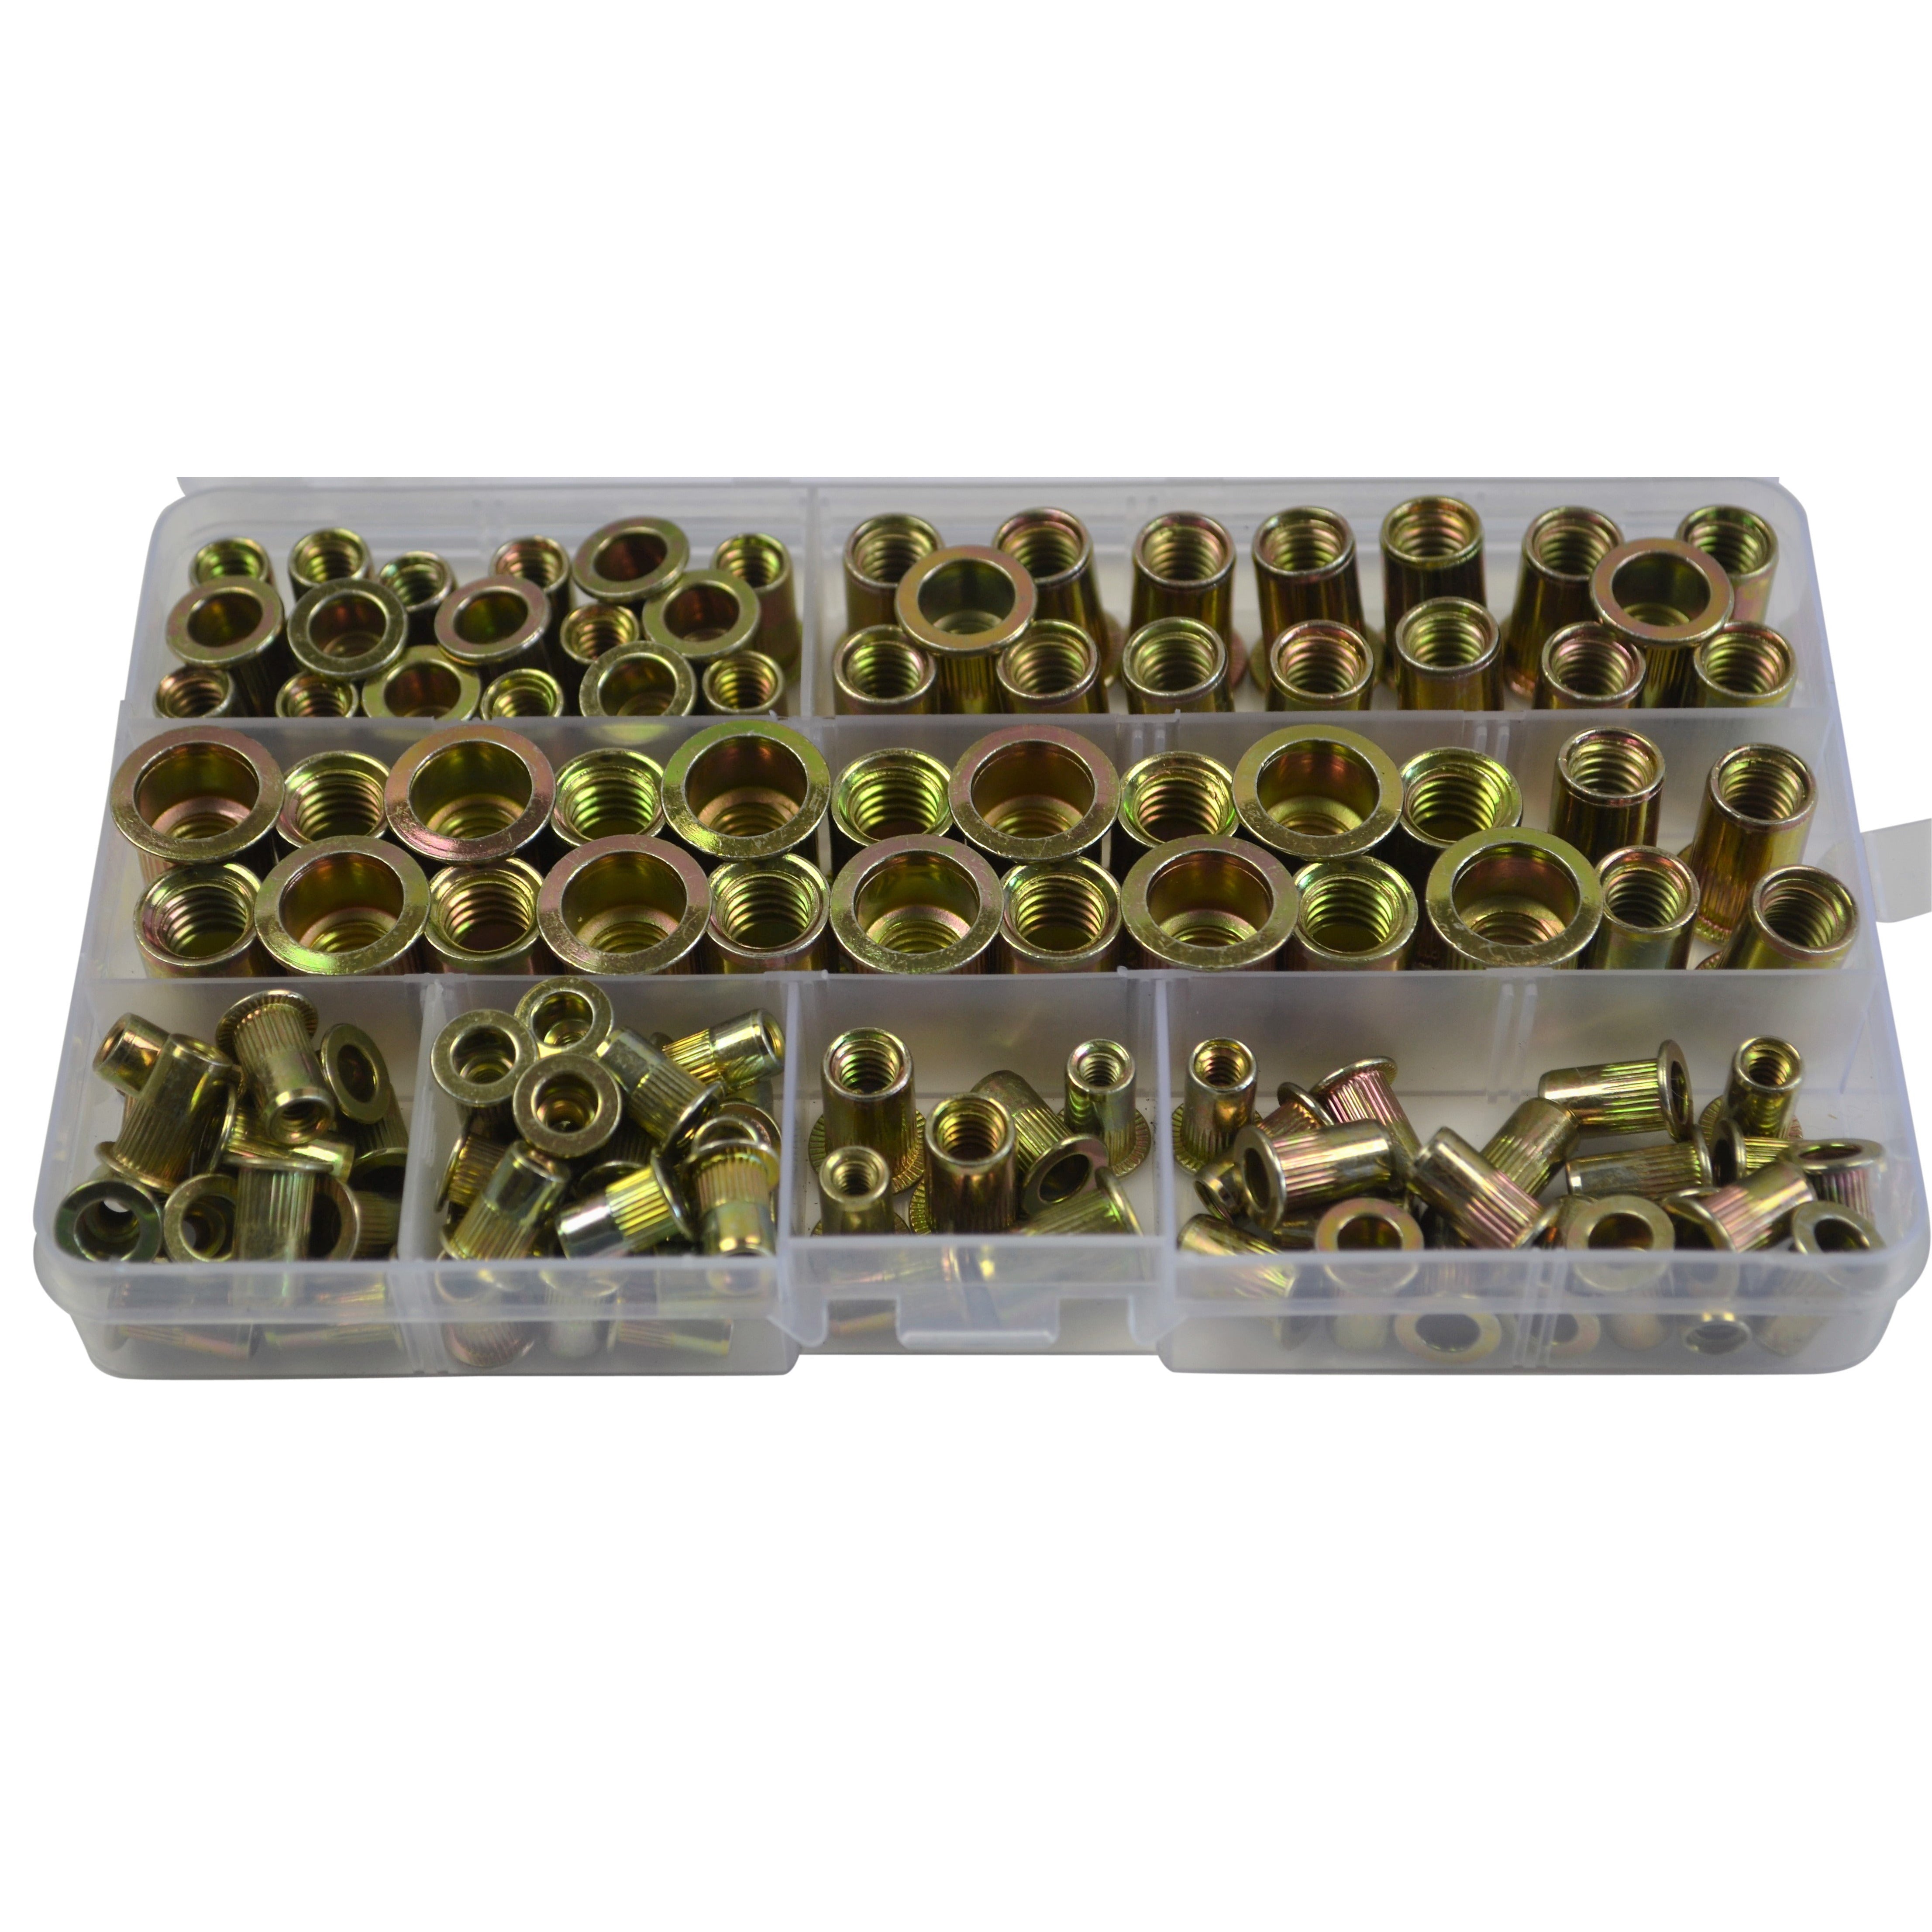 imperial nutserts rivnuts steel kit assorted sizes 6/32 8/32 10/24 1/4 5/16 3/8 fastners industrial hex nuts hardware rivnut gun supplies